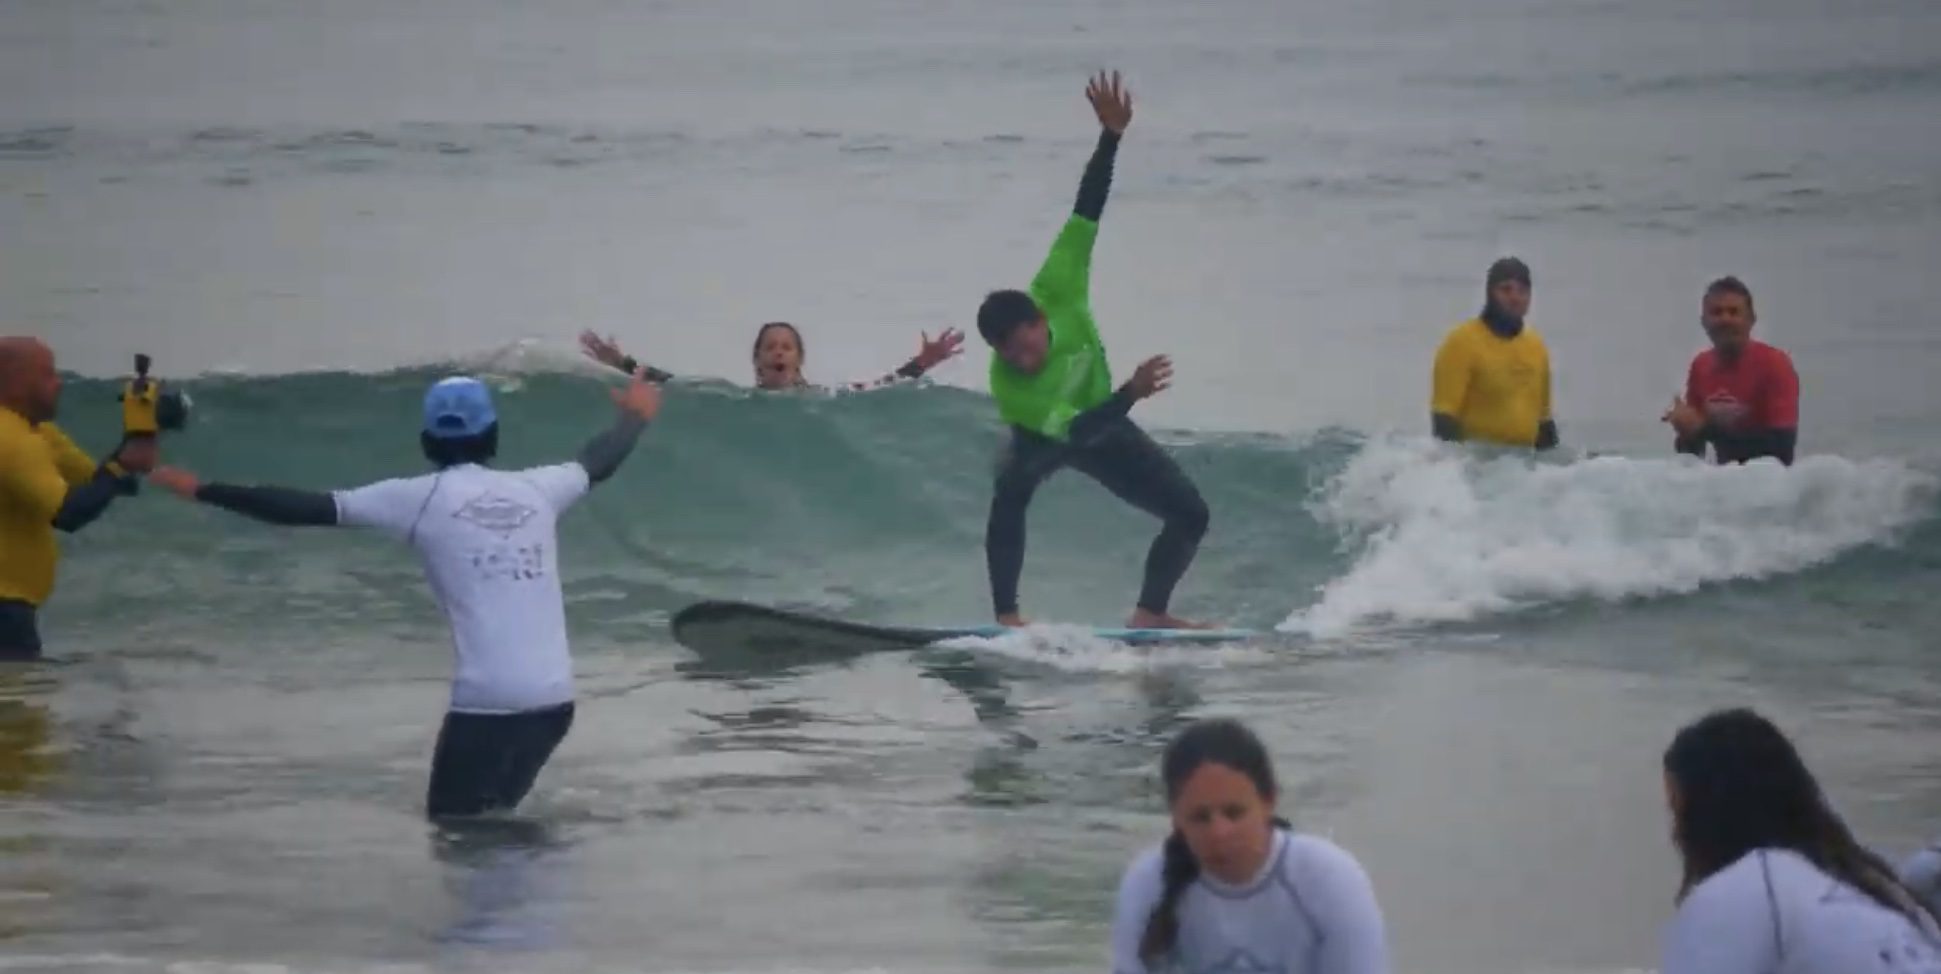 Hawaii Adaptive Surf Team